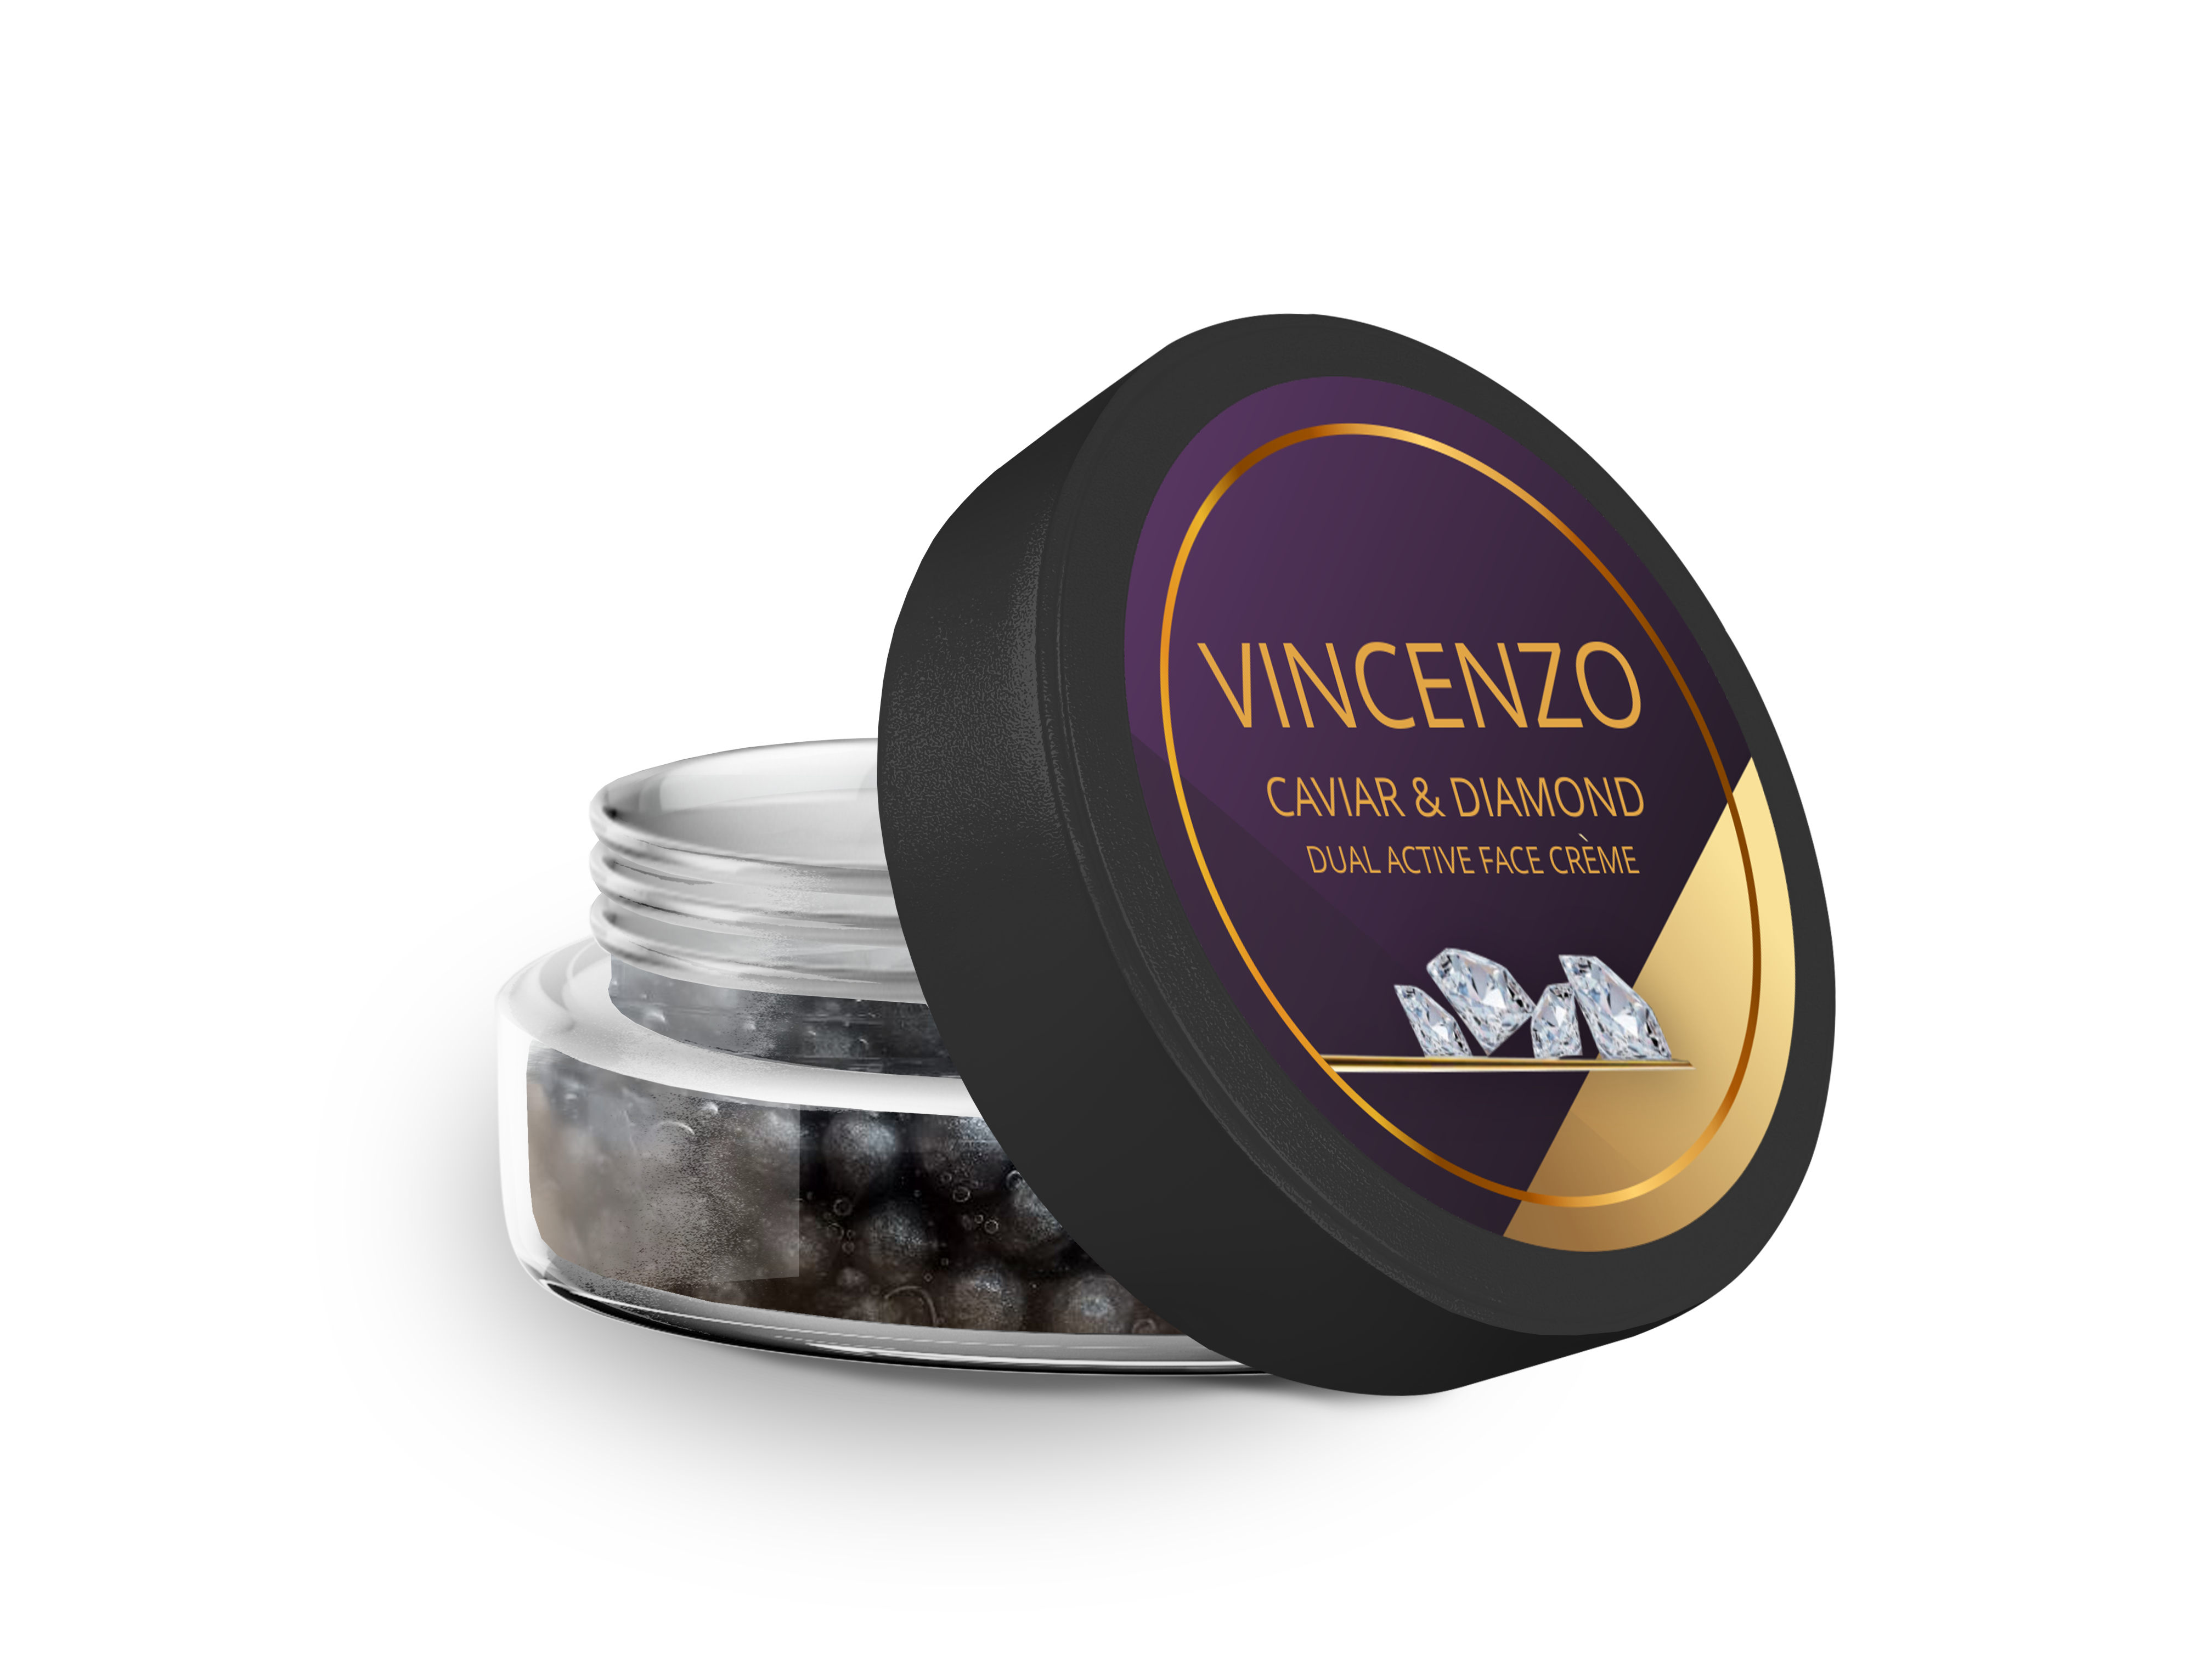 Vincenzo Caviar & Diamond face cream free sample